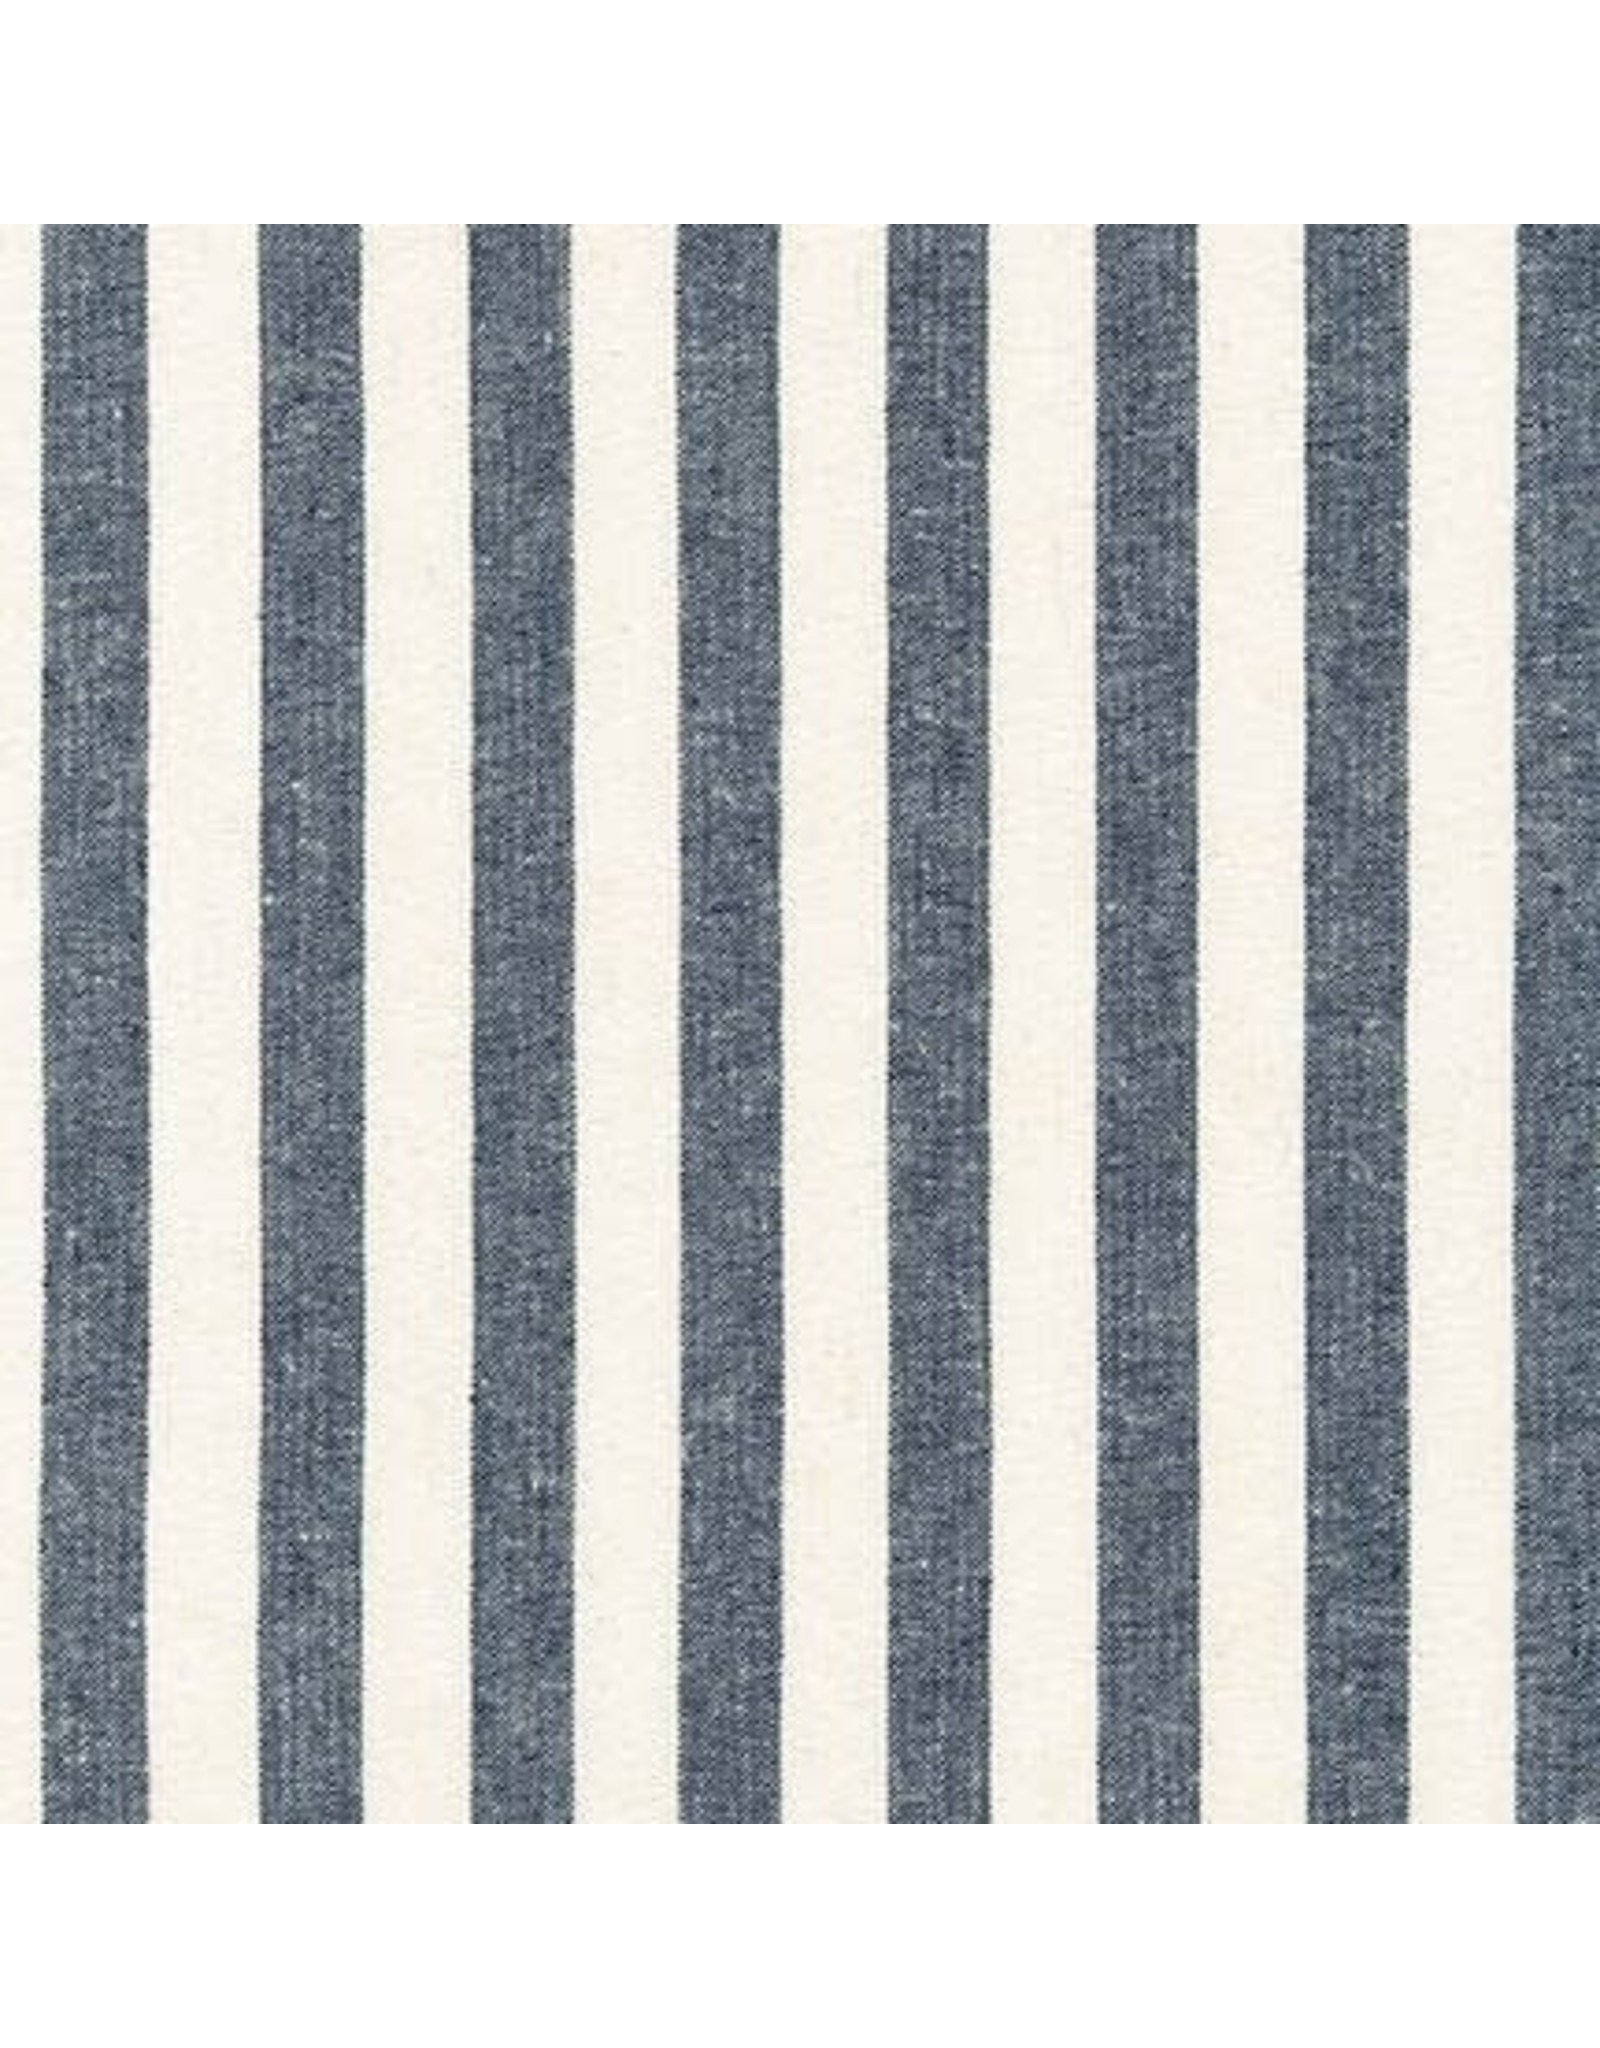 Robert Kaufman Linen, Essex Yarn Dyed Classic Wovens, Wide Stripe in Indigo, Fabric Half-Yards